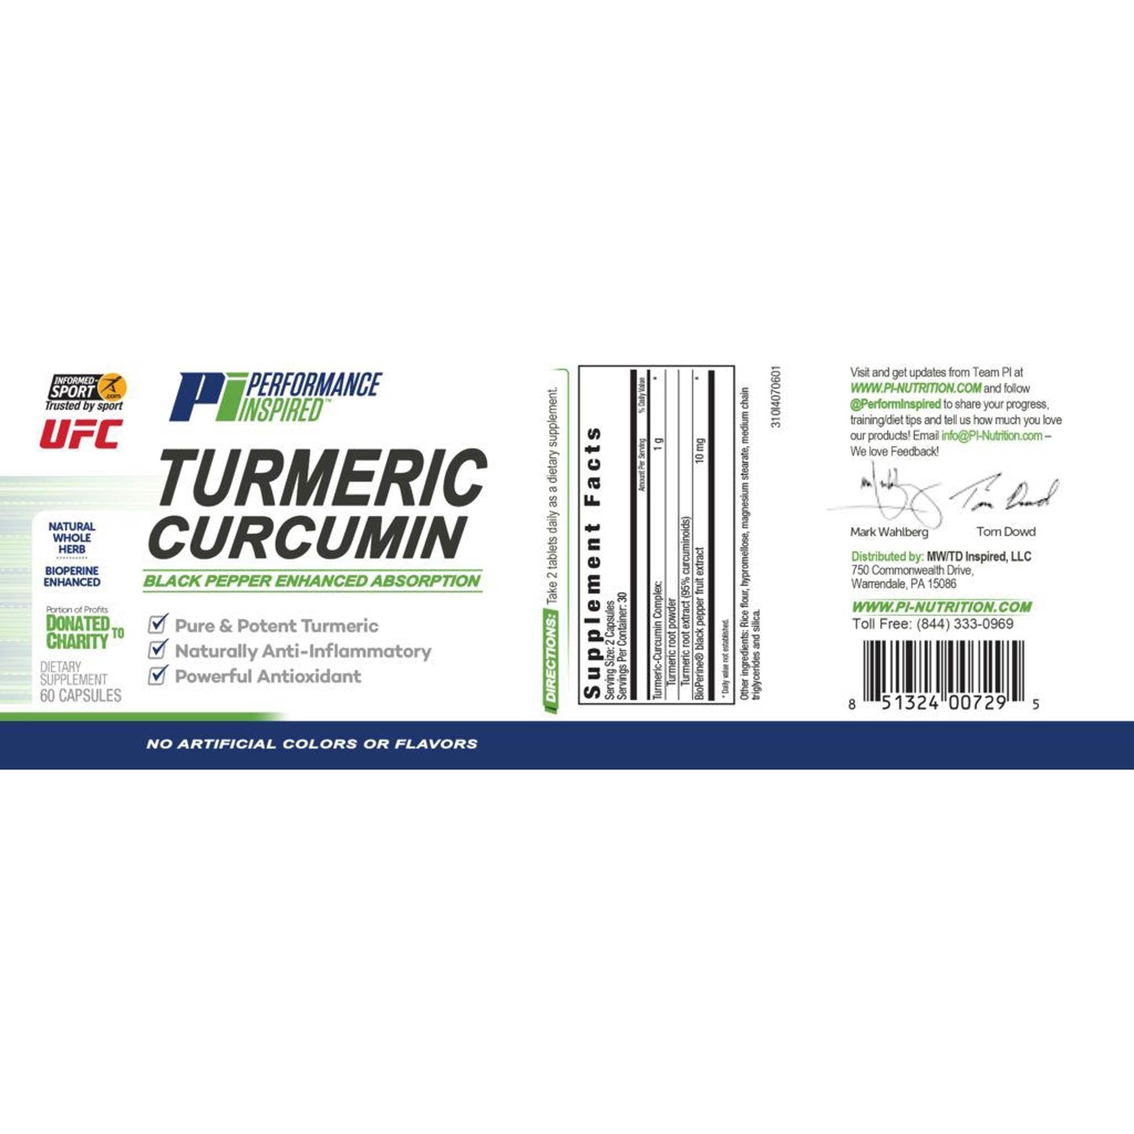 Performance Inspired Turmeric Curcumin Capsules 60 Ct. - Image 2 of 2